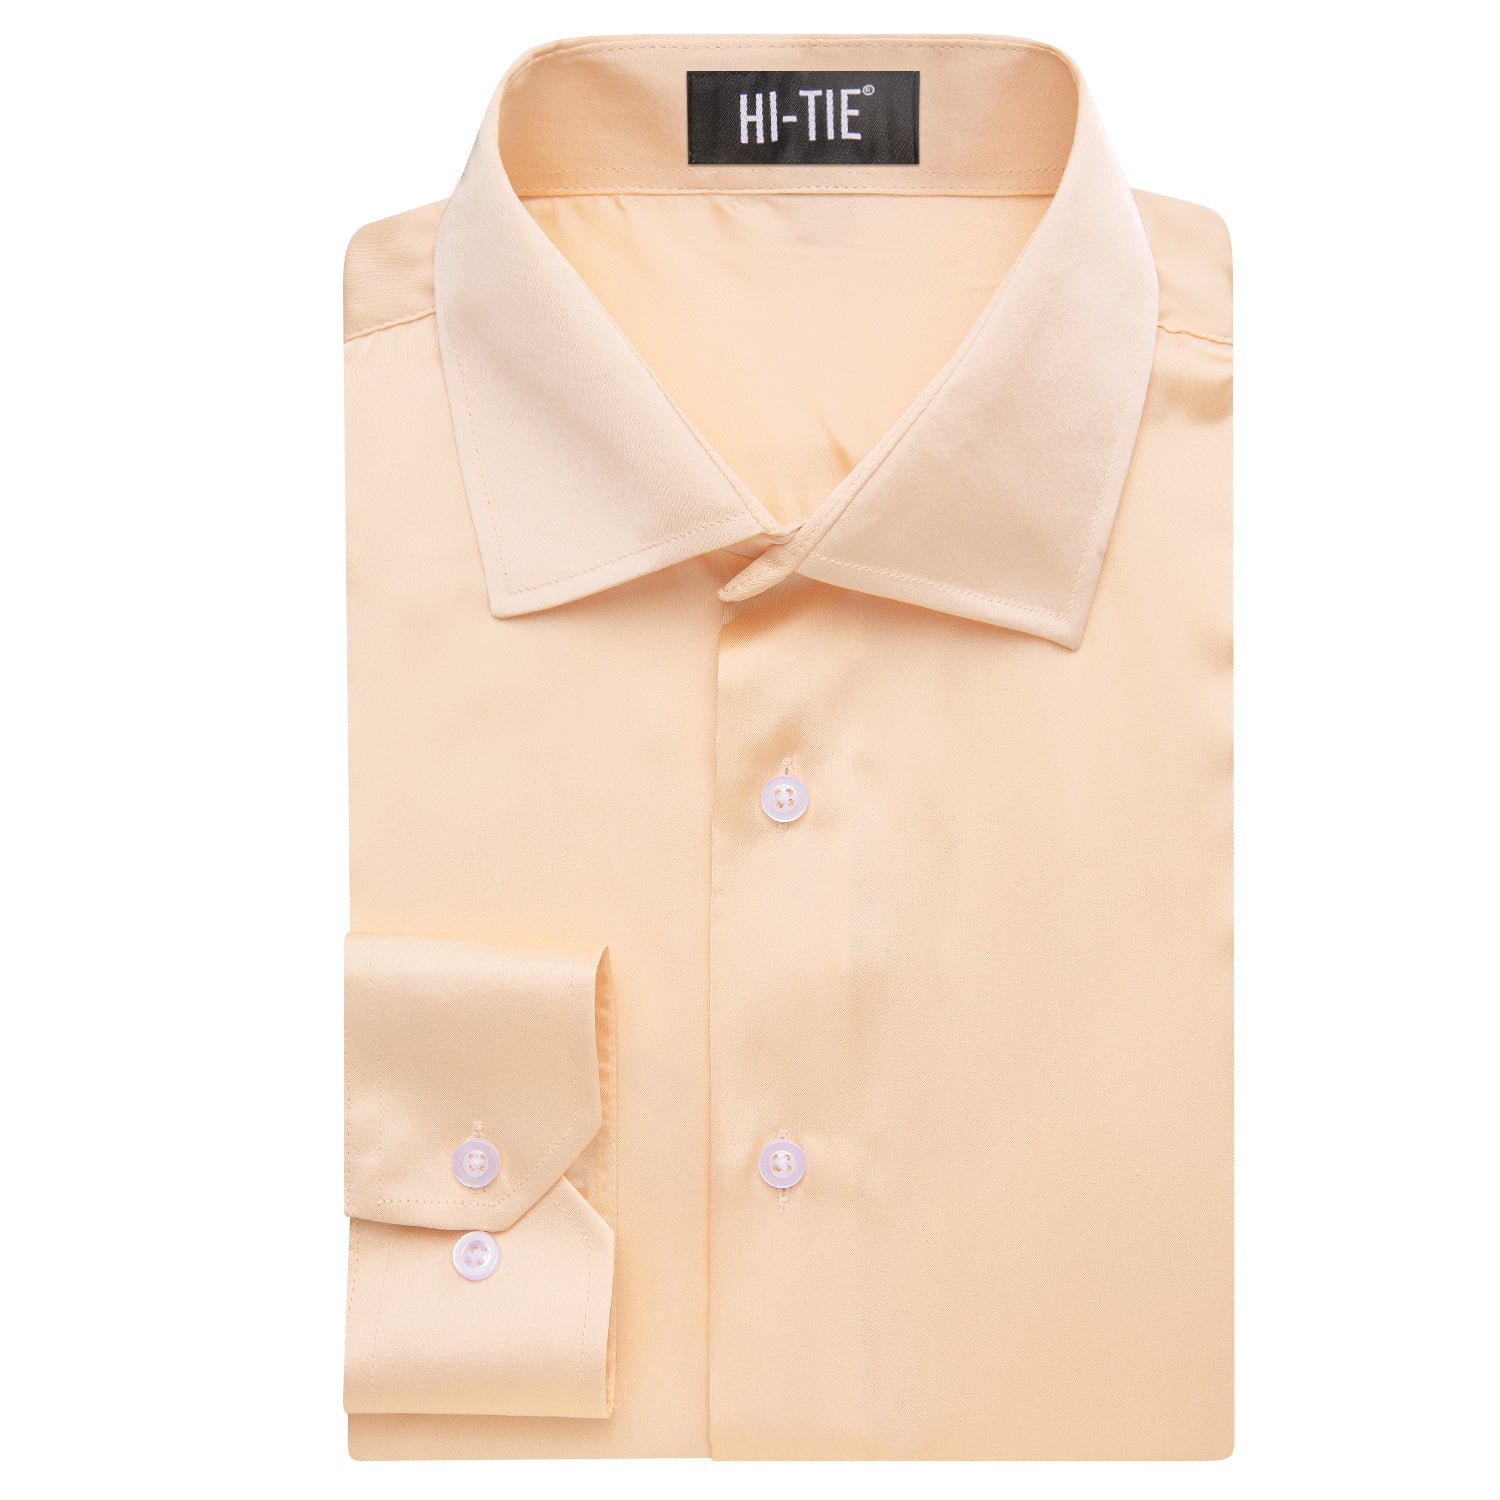 Mist Orange Solid Satin Chiffon Non-stretch Men's Long Sleeve Shirt